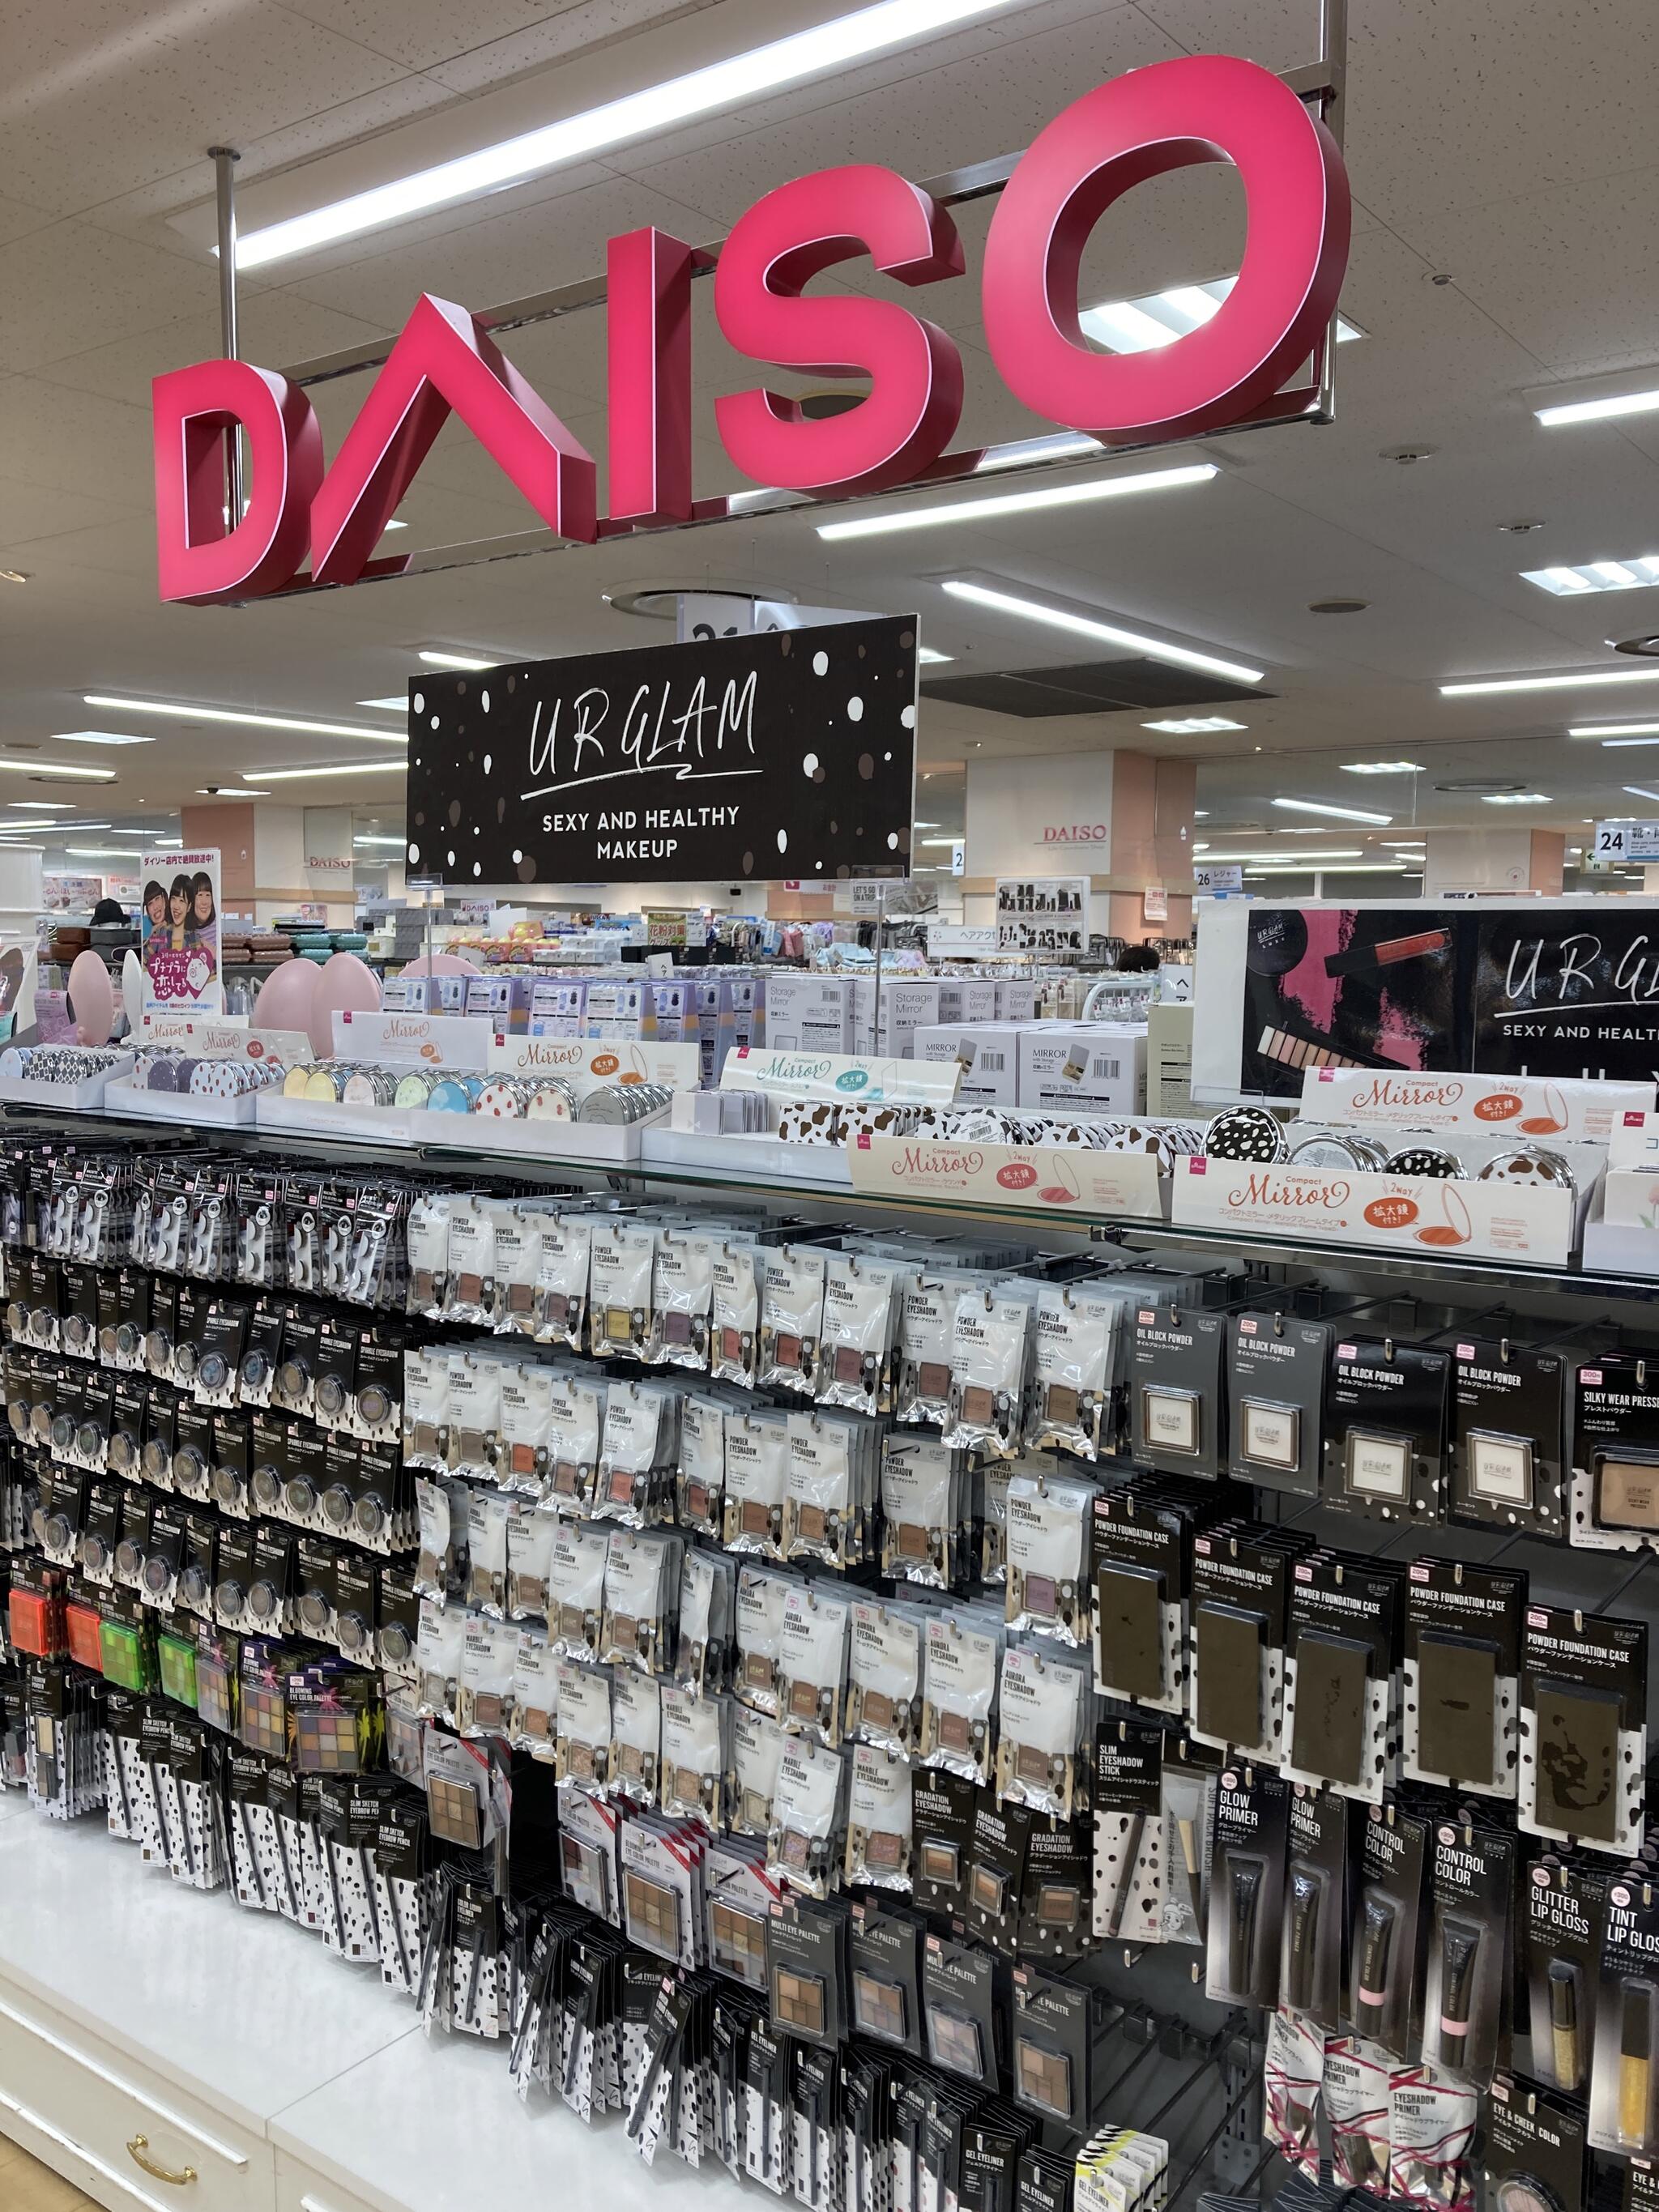 DAISO アルカキット錦糸町店の代表写真2